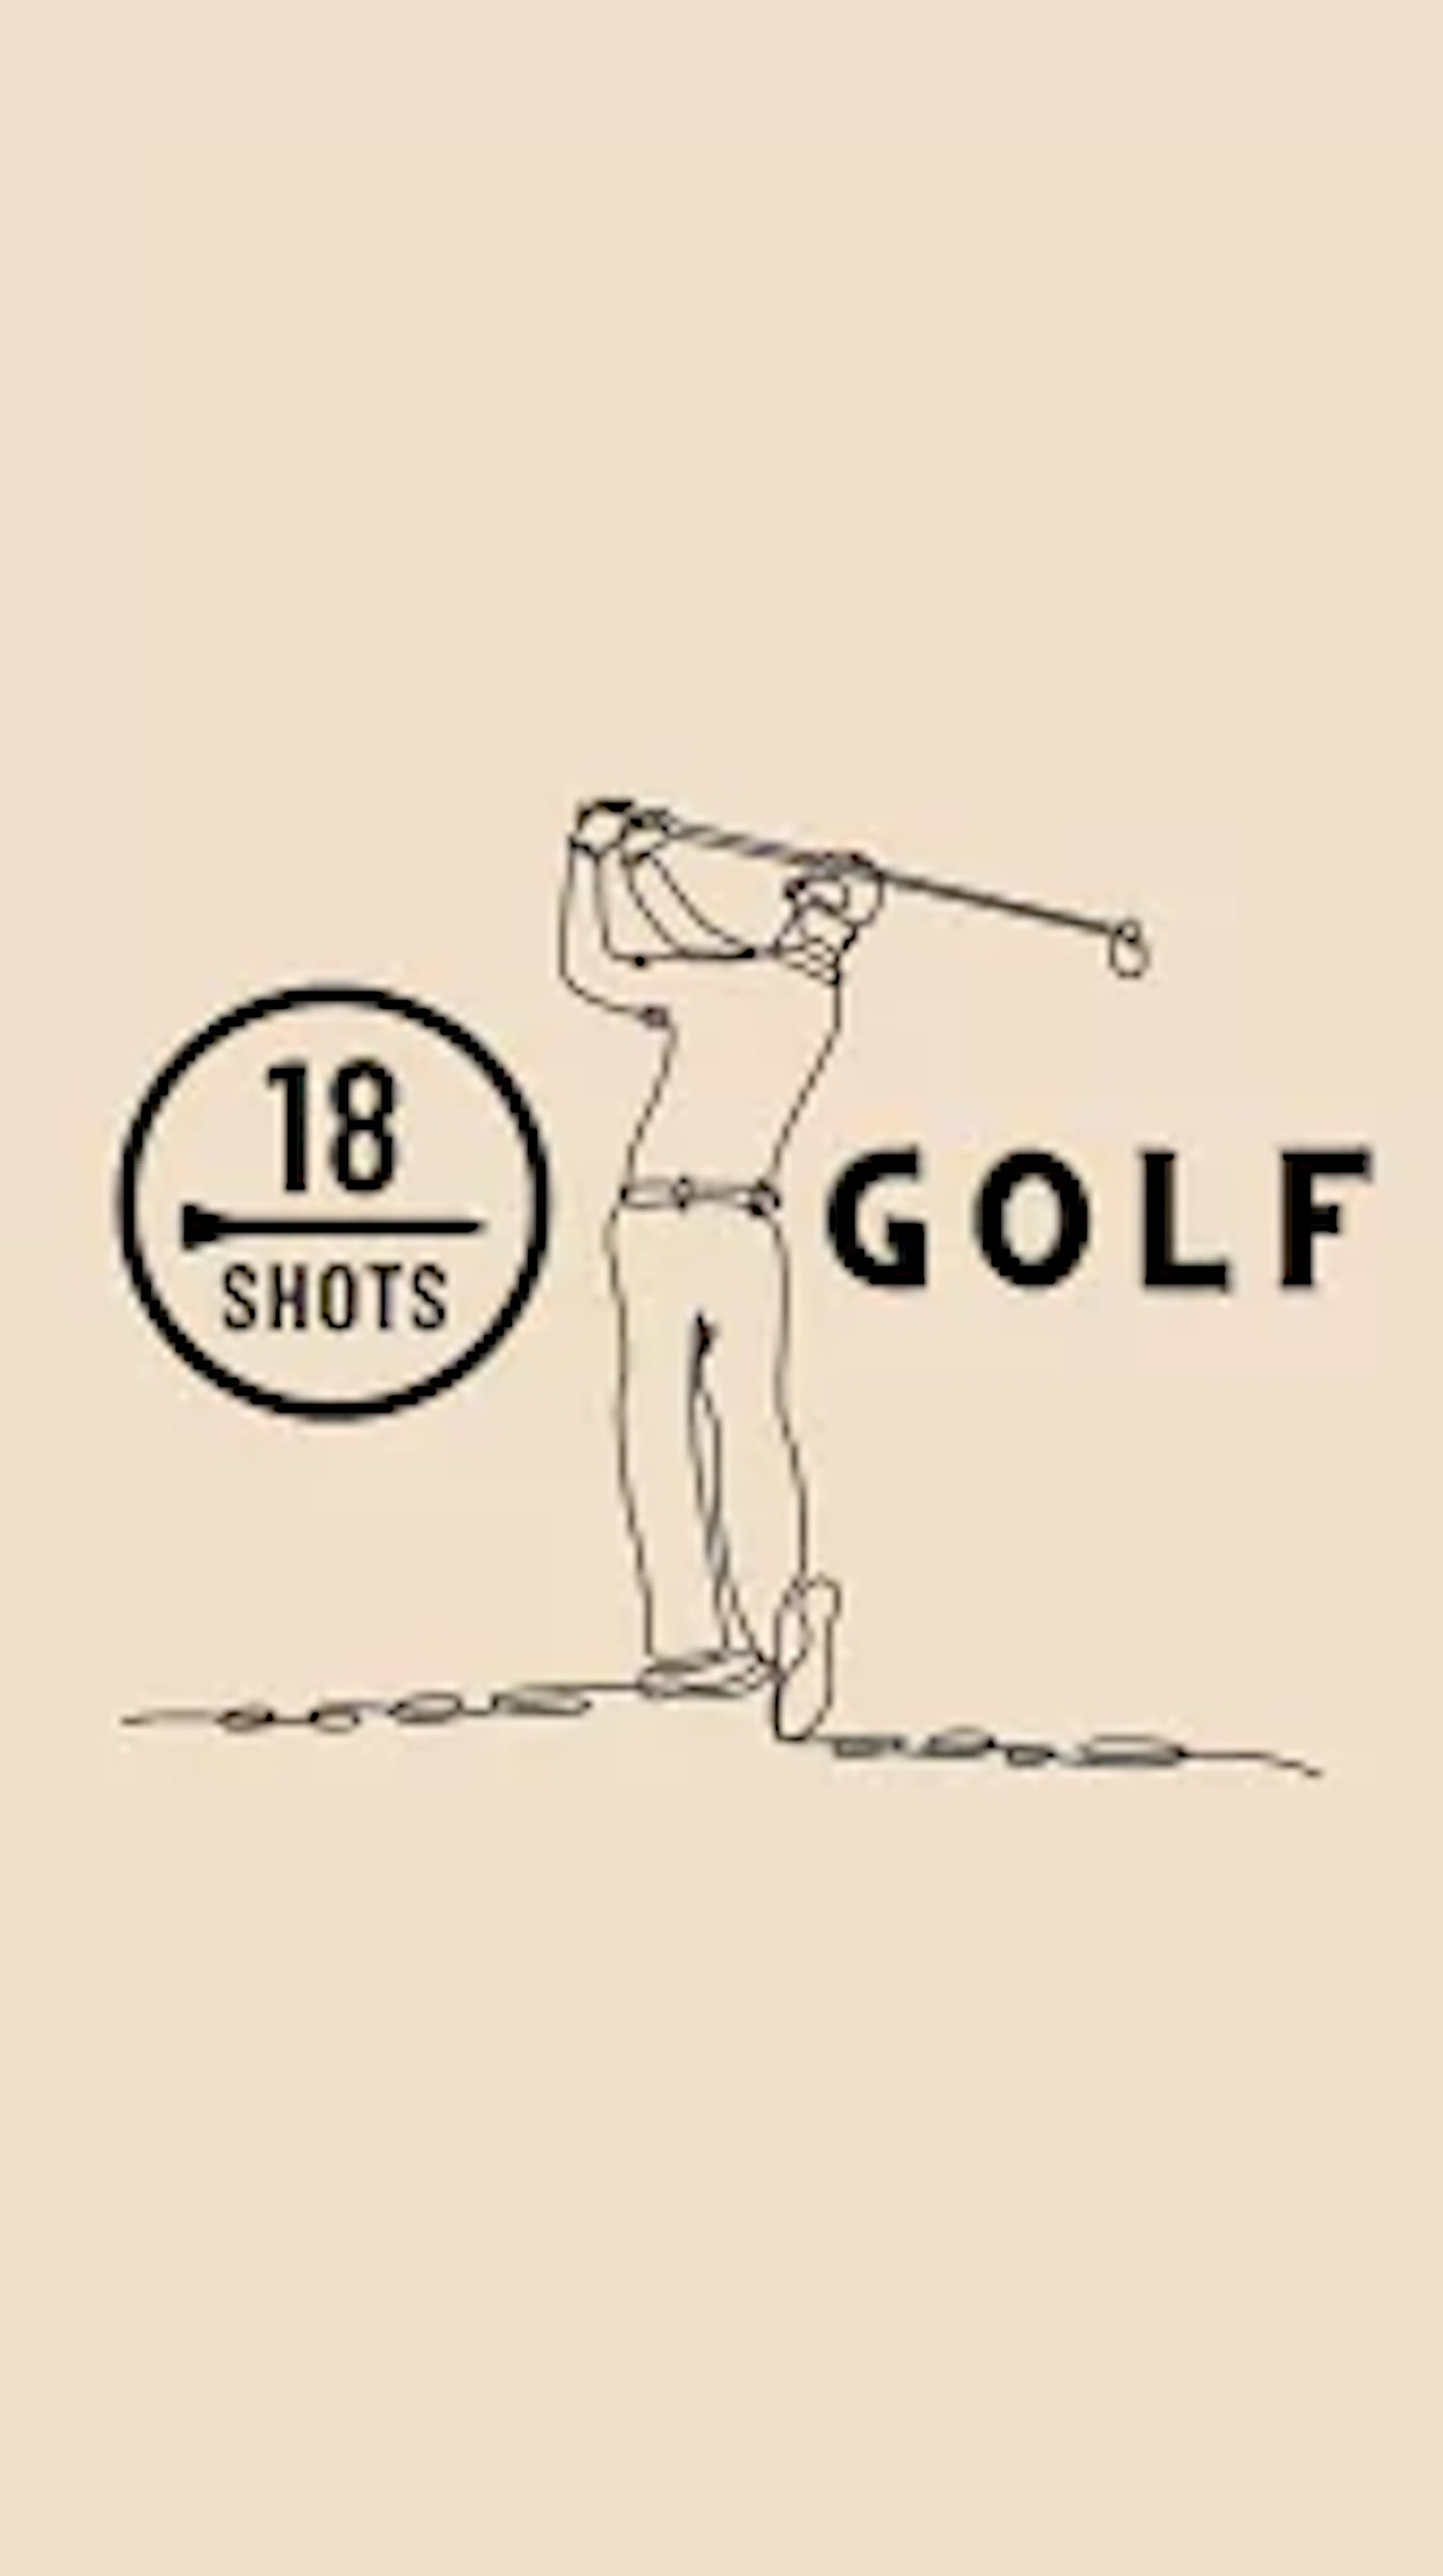 18 shots golf